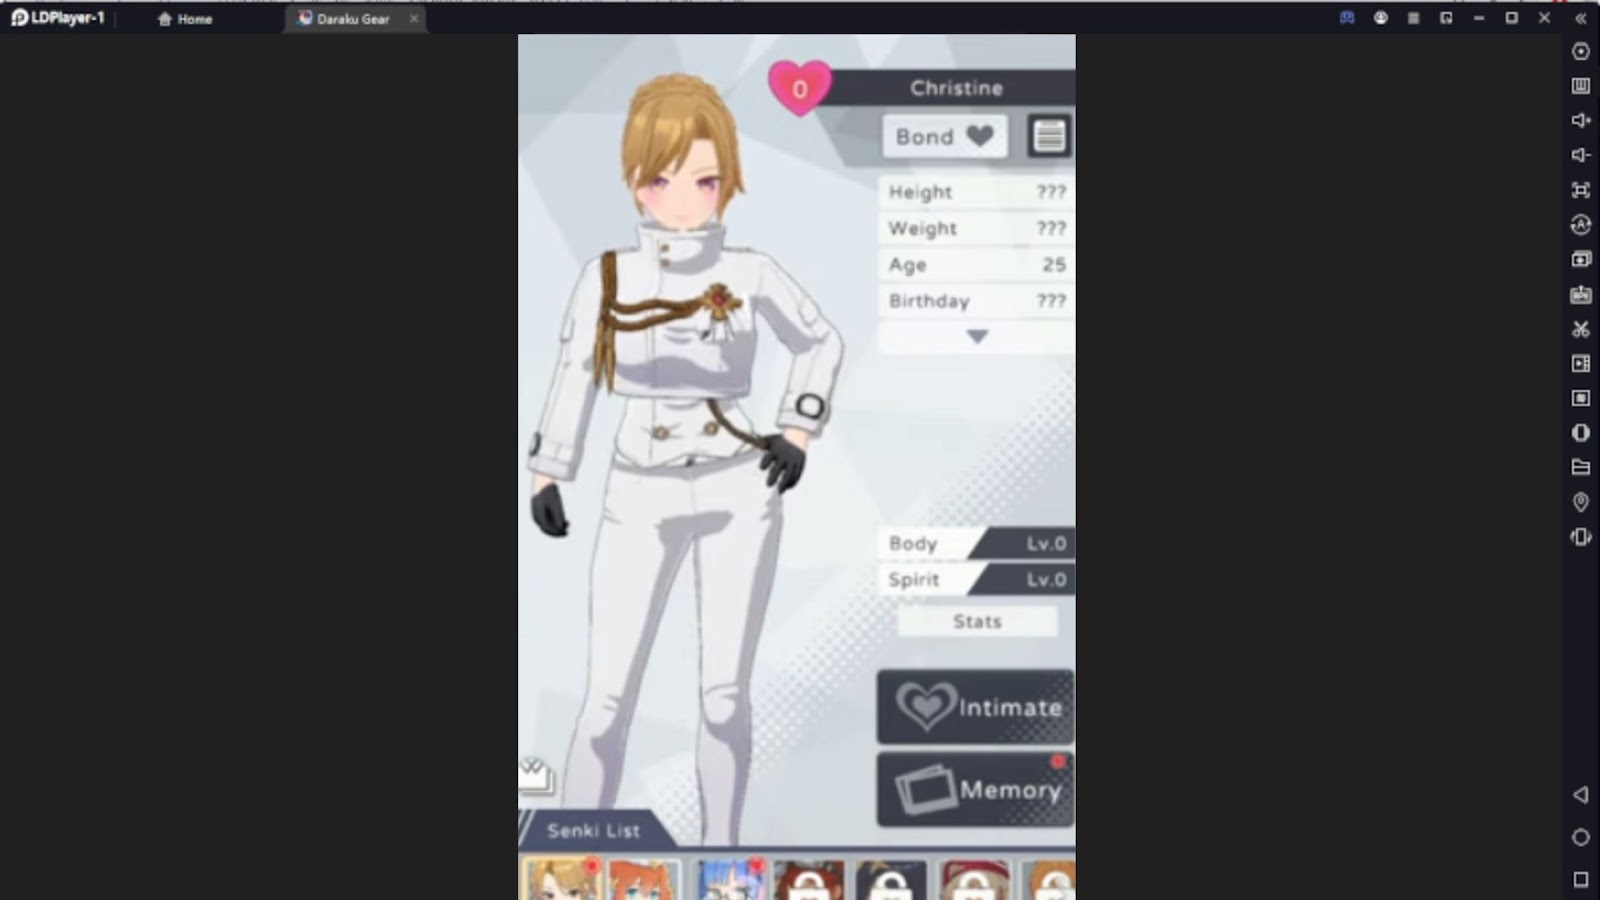 Daraku Gear Beginner Guide for the Characters